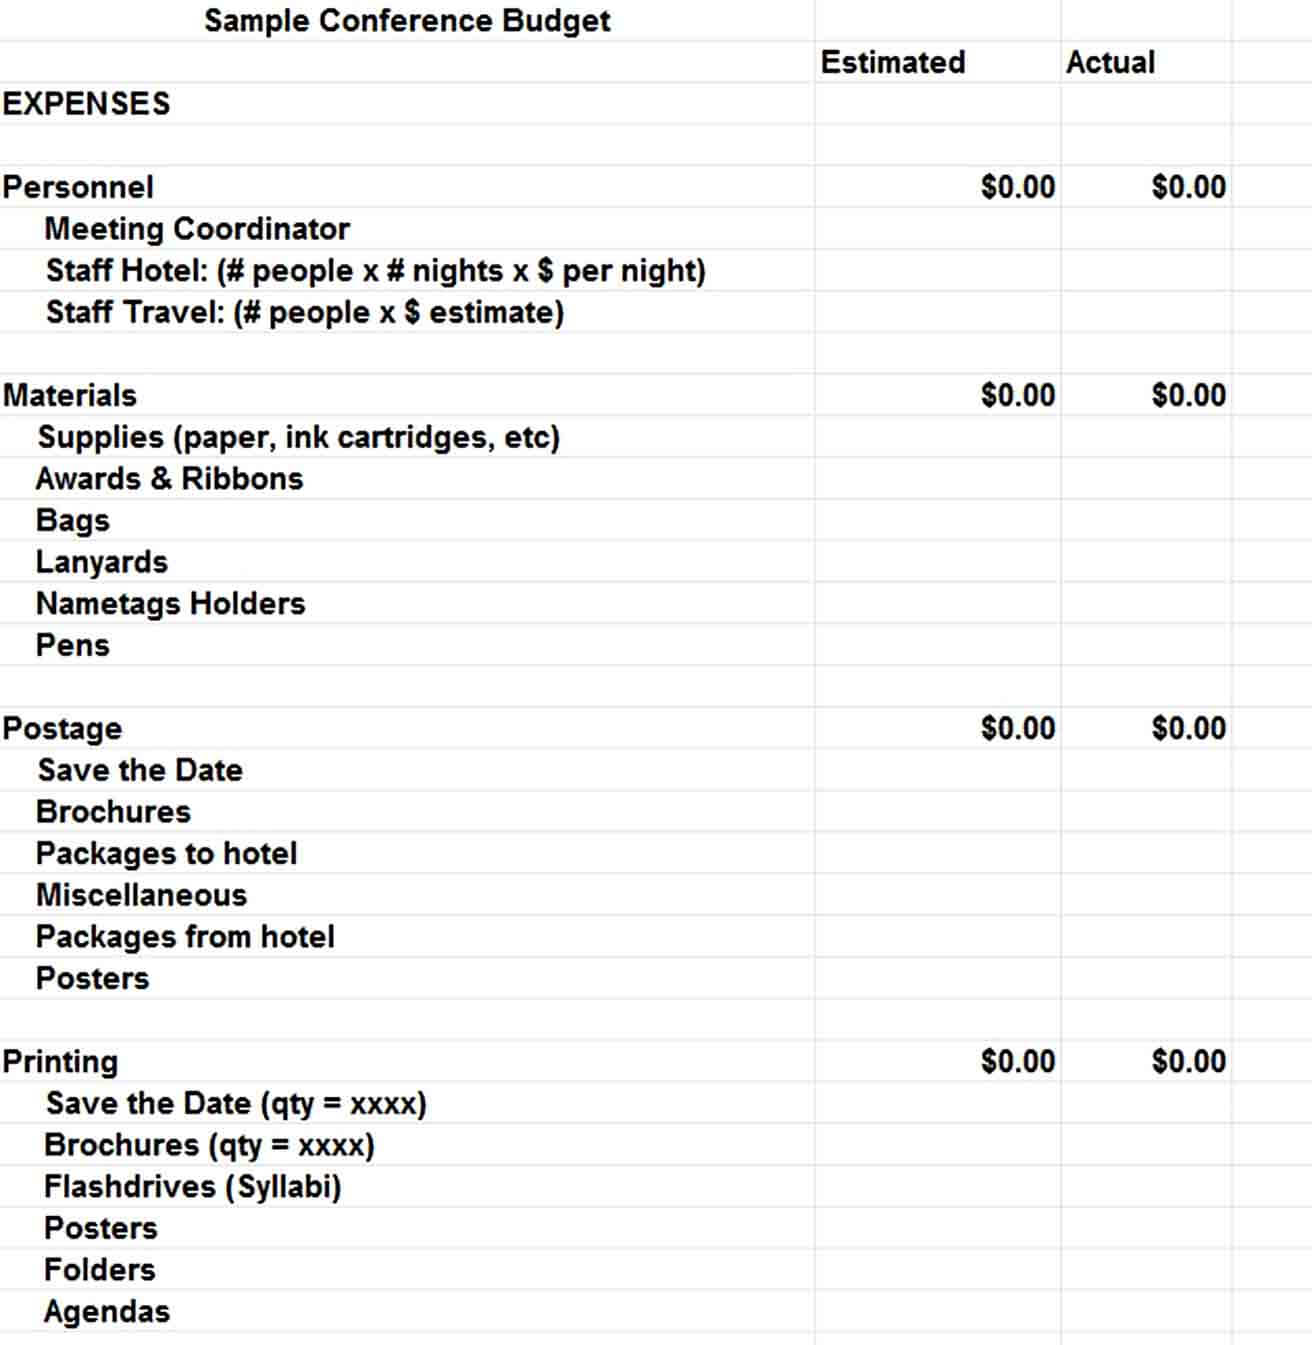 Conference Budget Sample